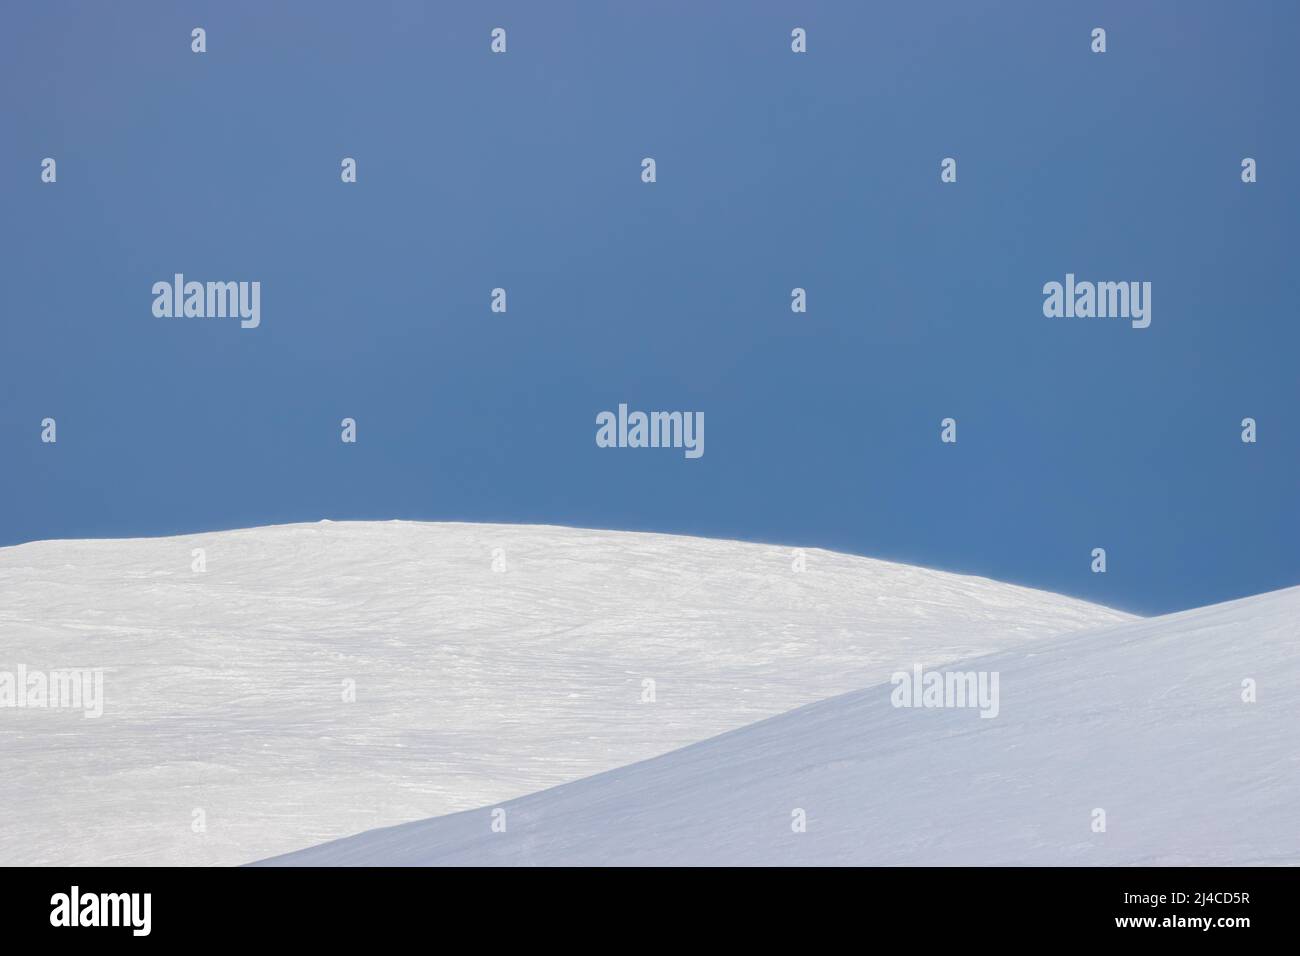 extraordinary finnish lapland winter landscape Stock Photo